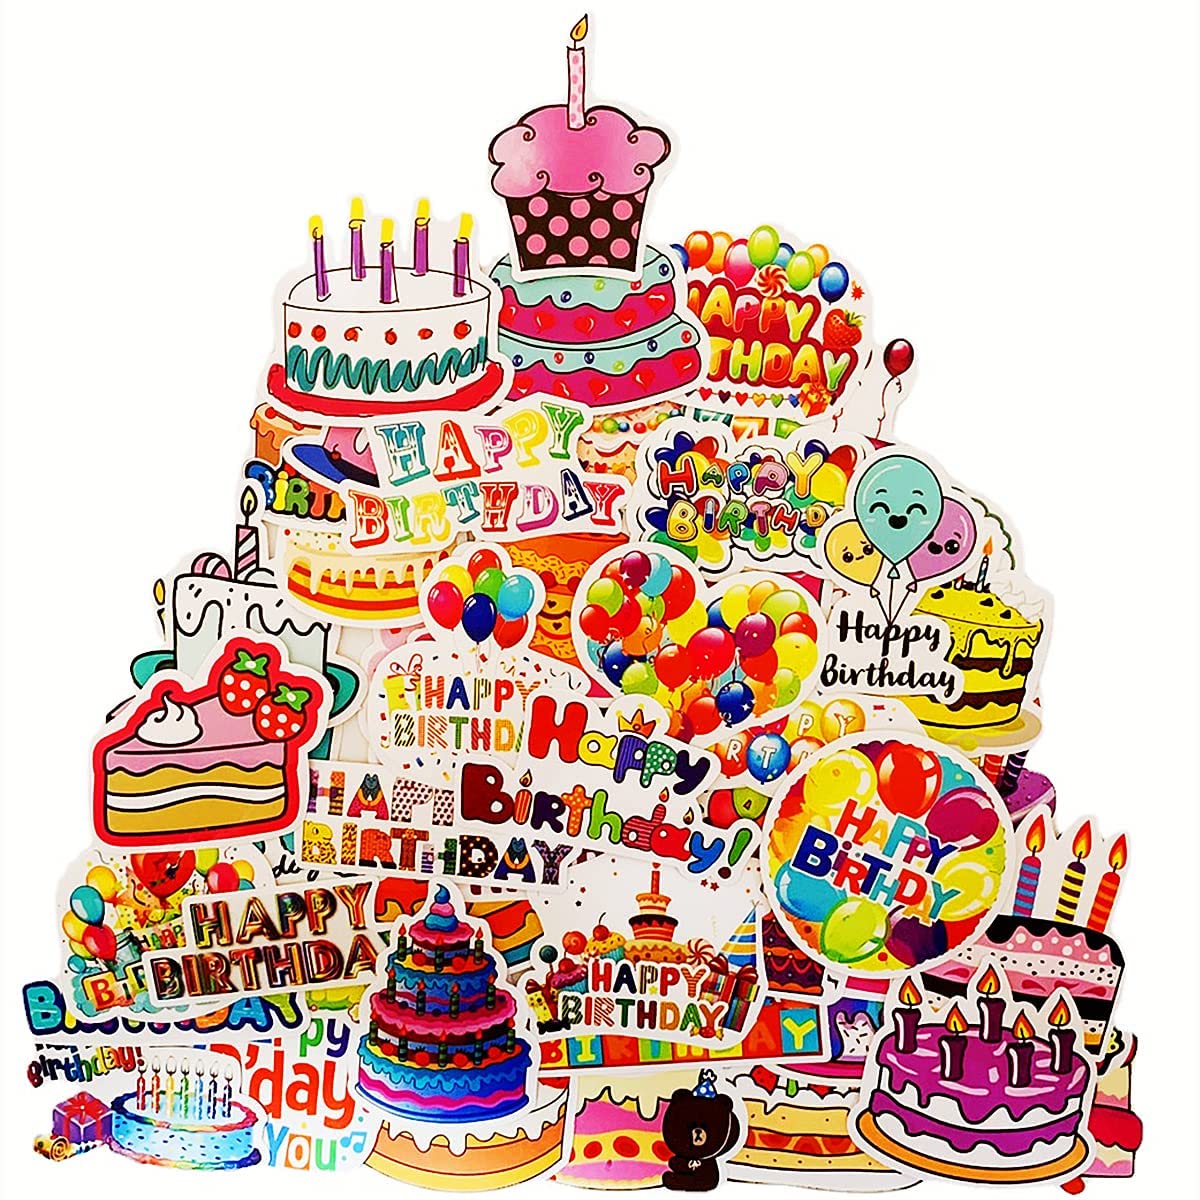 50PCS Happy Birthday Stickers Birthday Party Stickers for Kids Adults Party School Supplies Reward Calendar Birthday Card